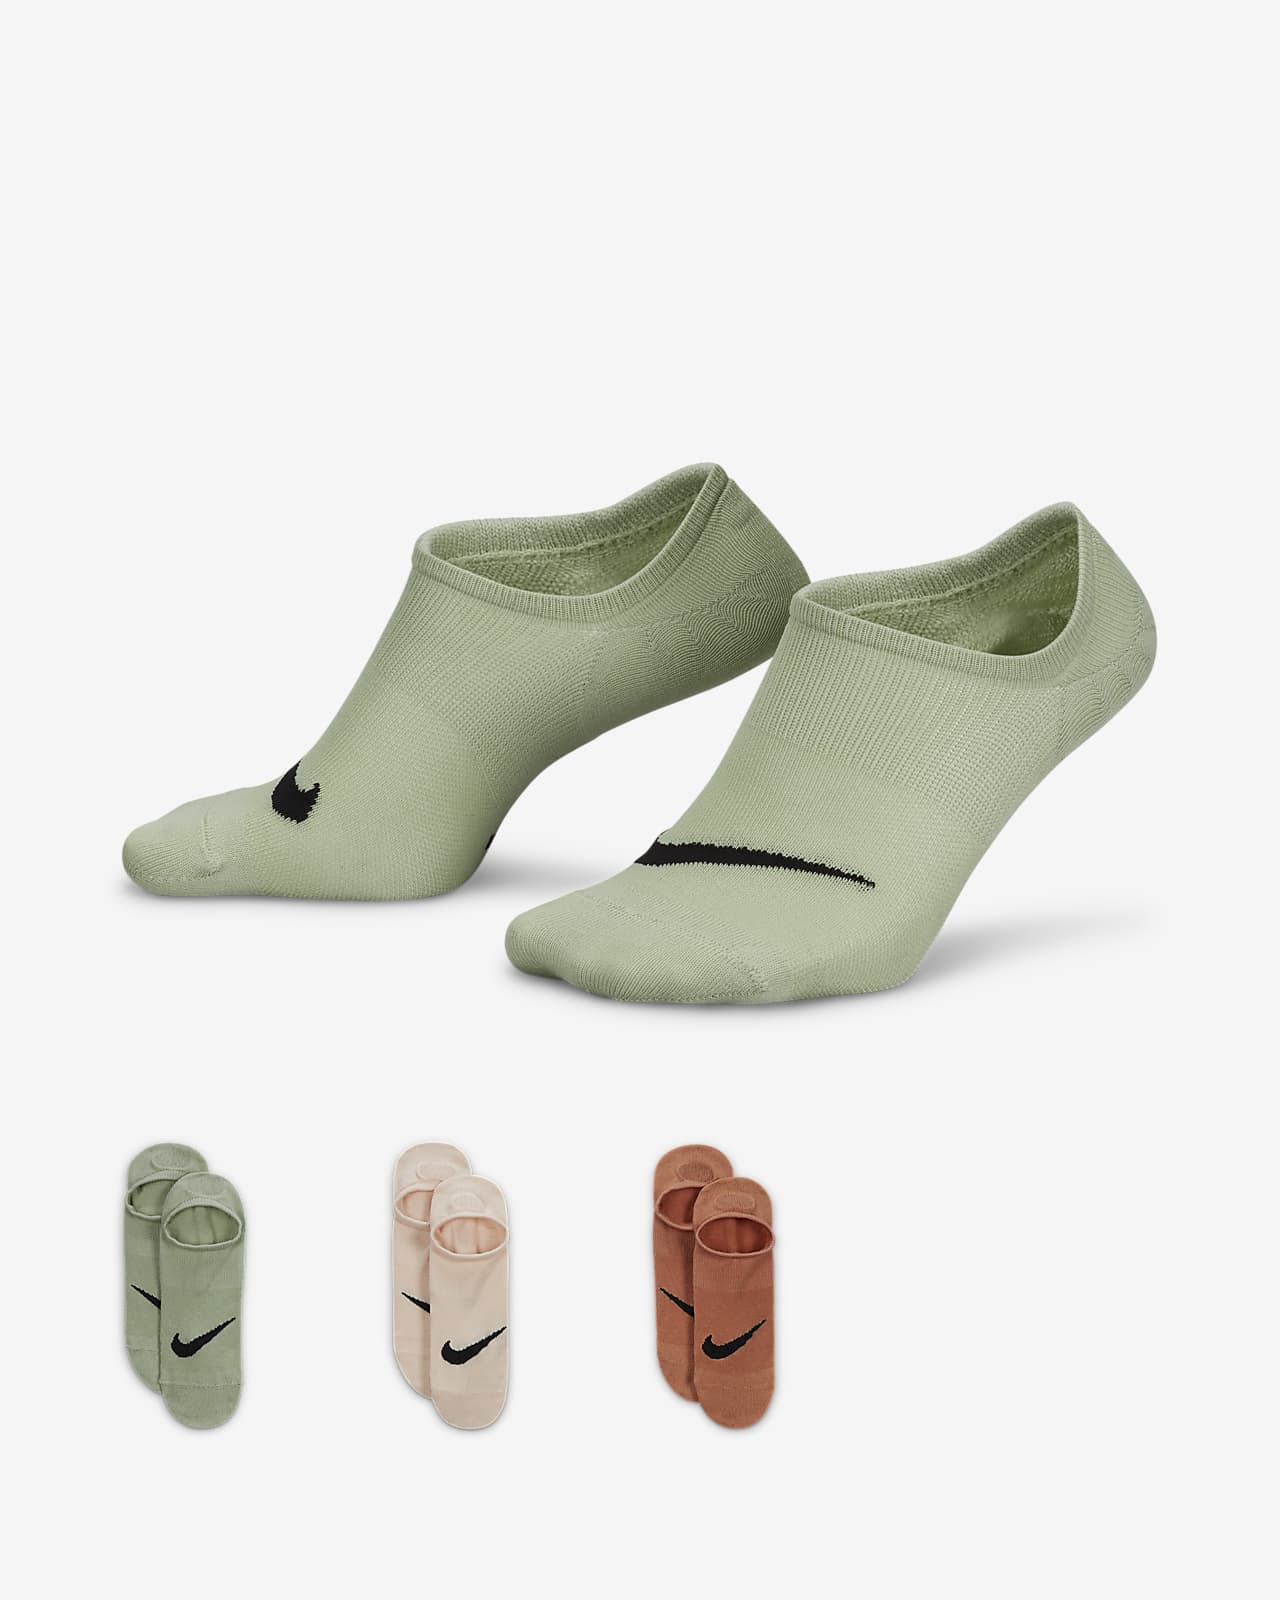 Mujer Running Calcetines. Nike US